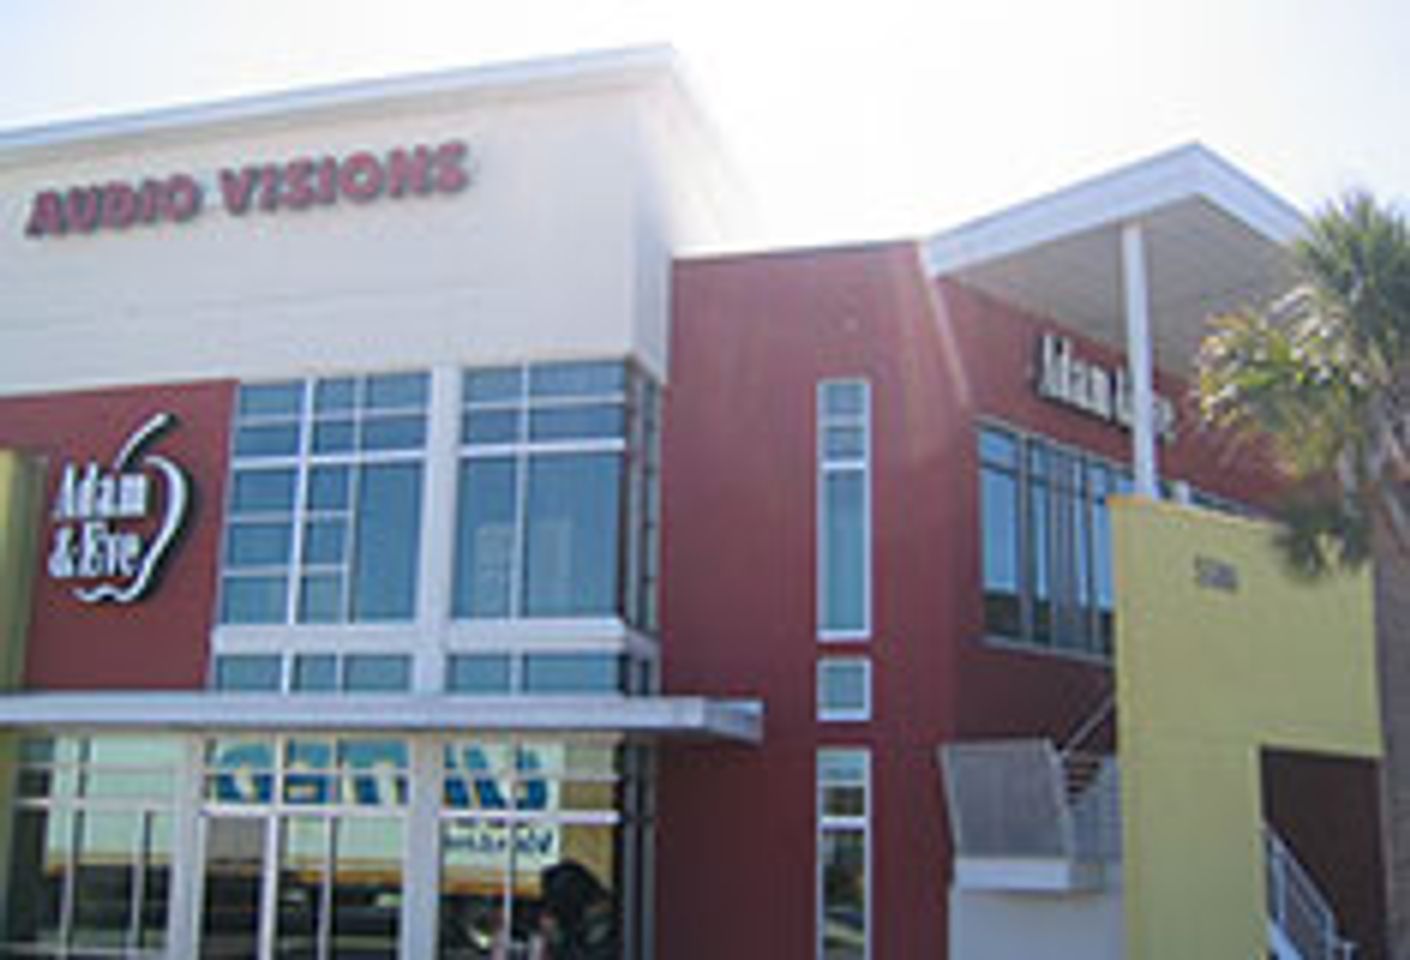 Adam & Eve Opens Flagship Store in Wilmington, N.C.